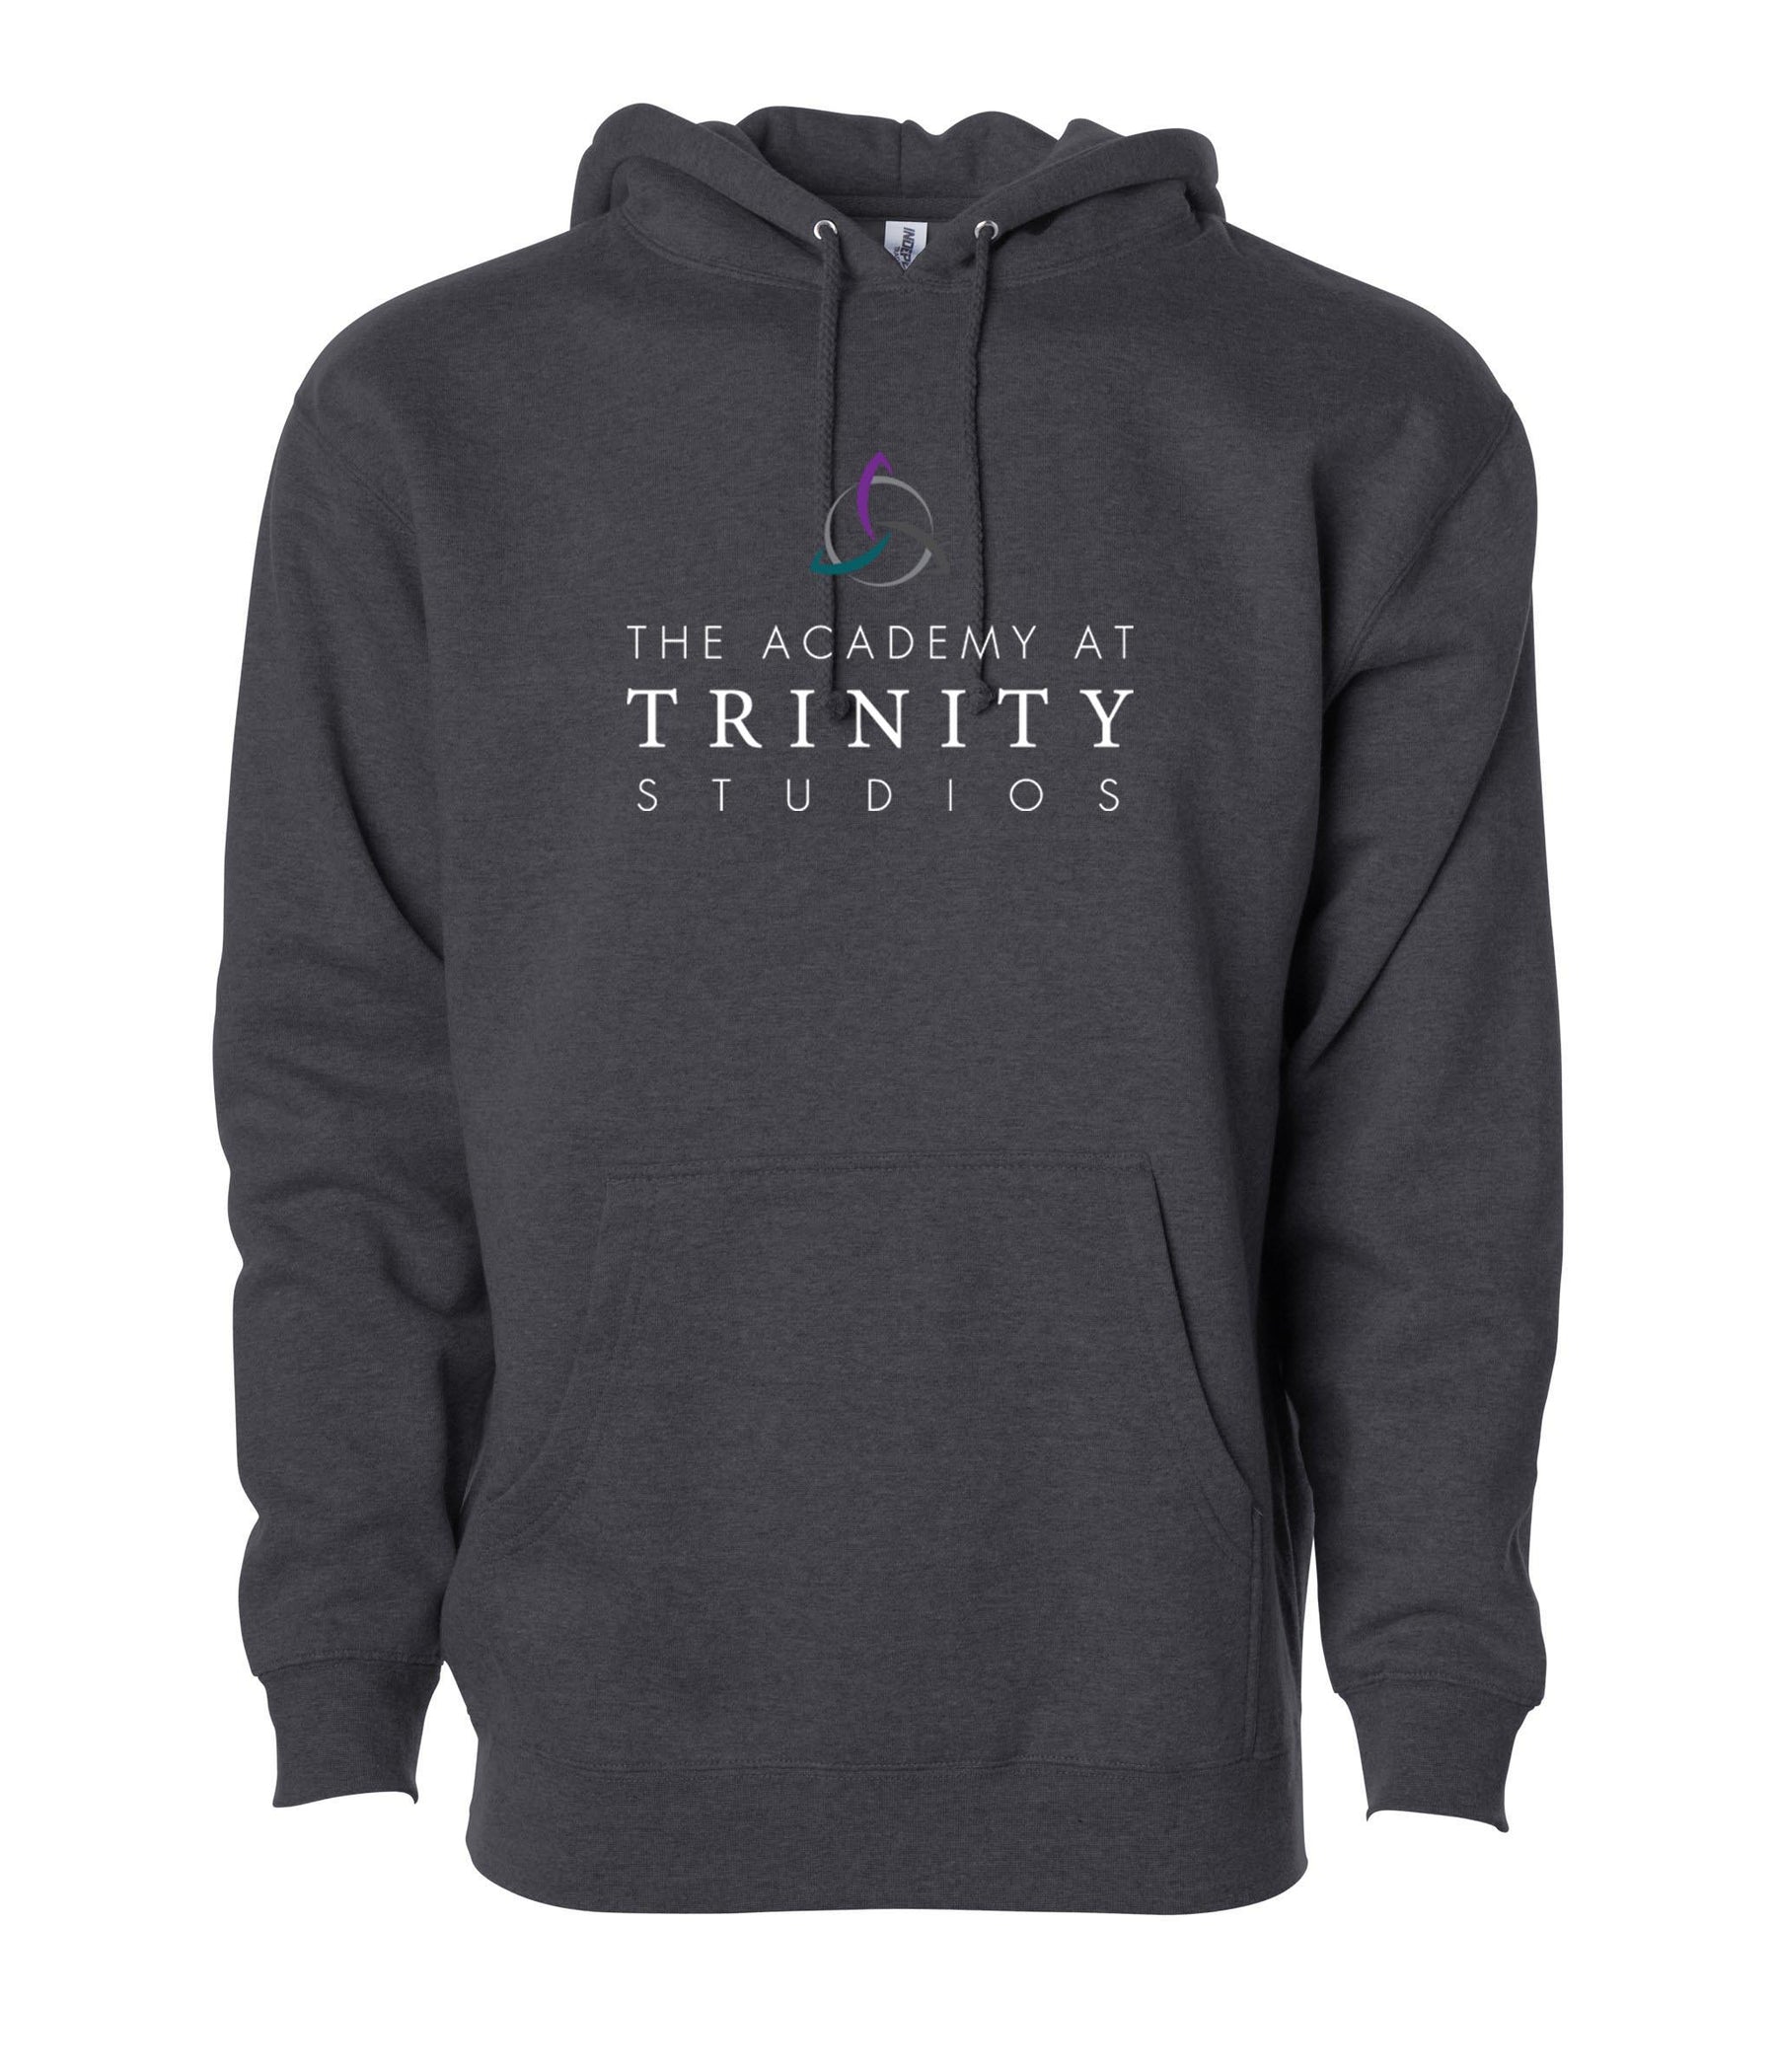 The Academy at Trinity Hooded Sweatshirt